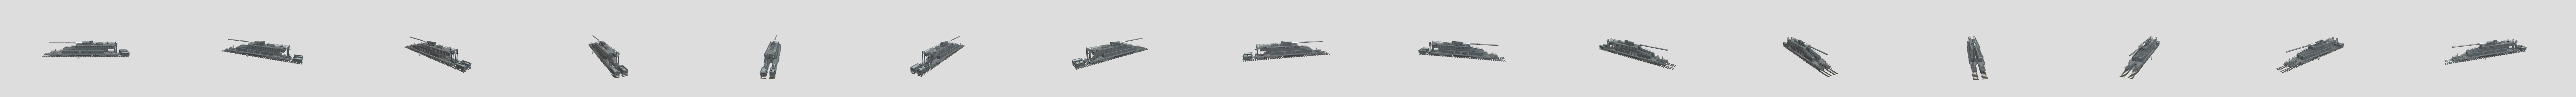 Building 🇩🇪Schwerer Gustav🇩🇪 (German Railgun) #papercraft